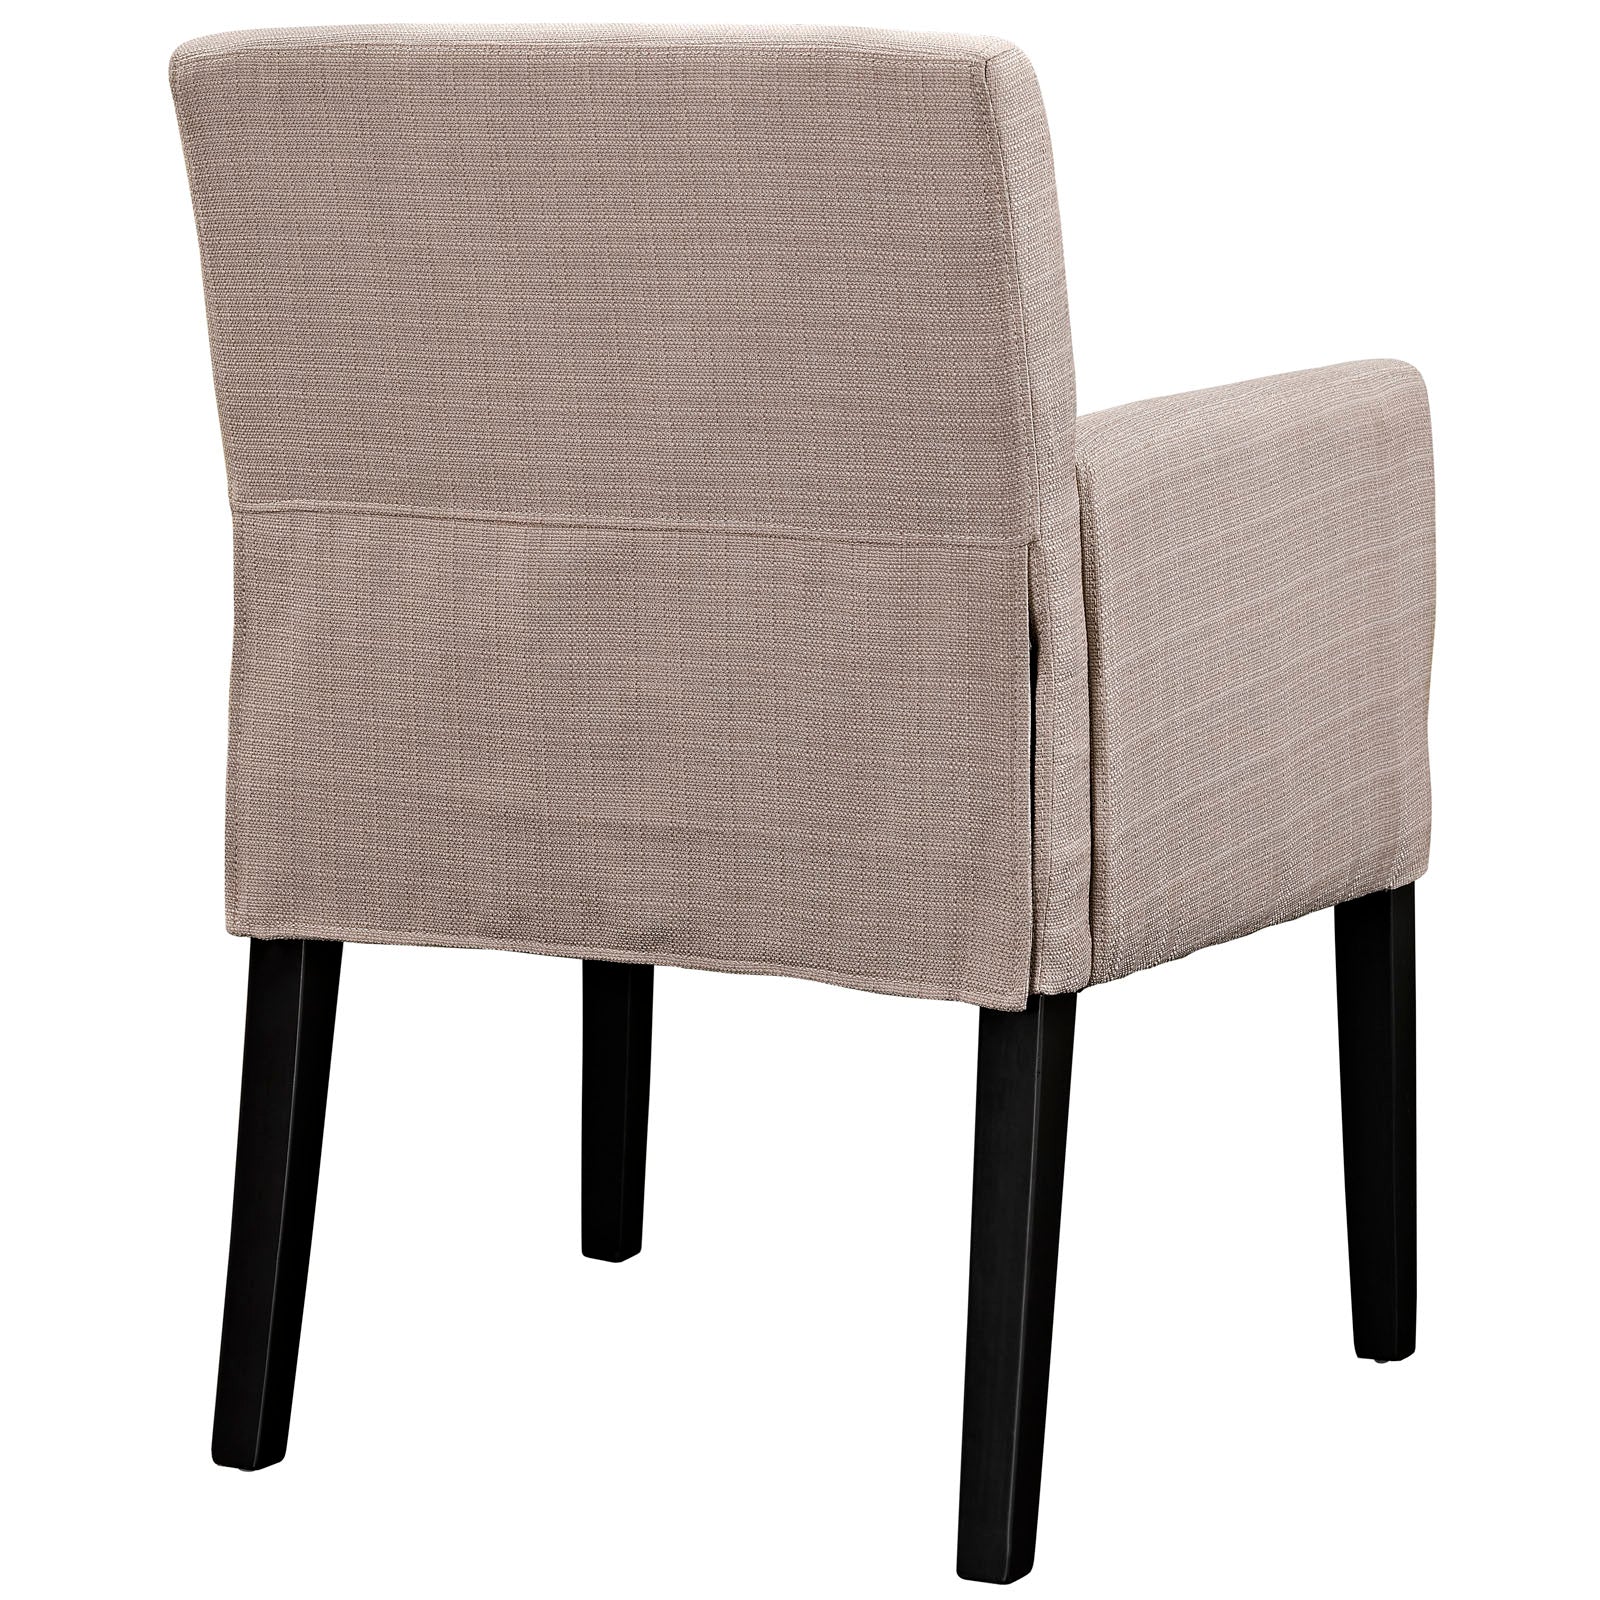 Chloe Upholstered Fabric Armchair - East Shore Modern Home Furnishings